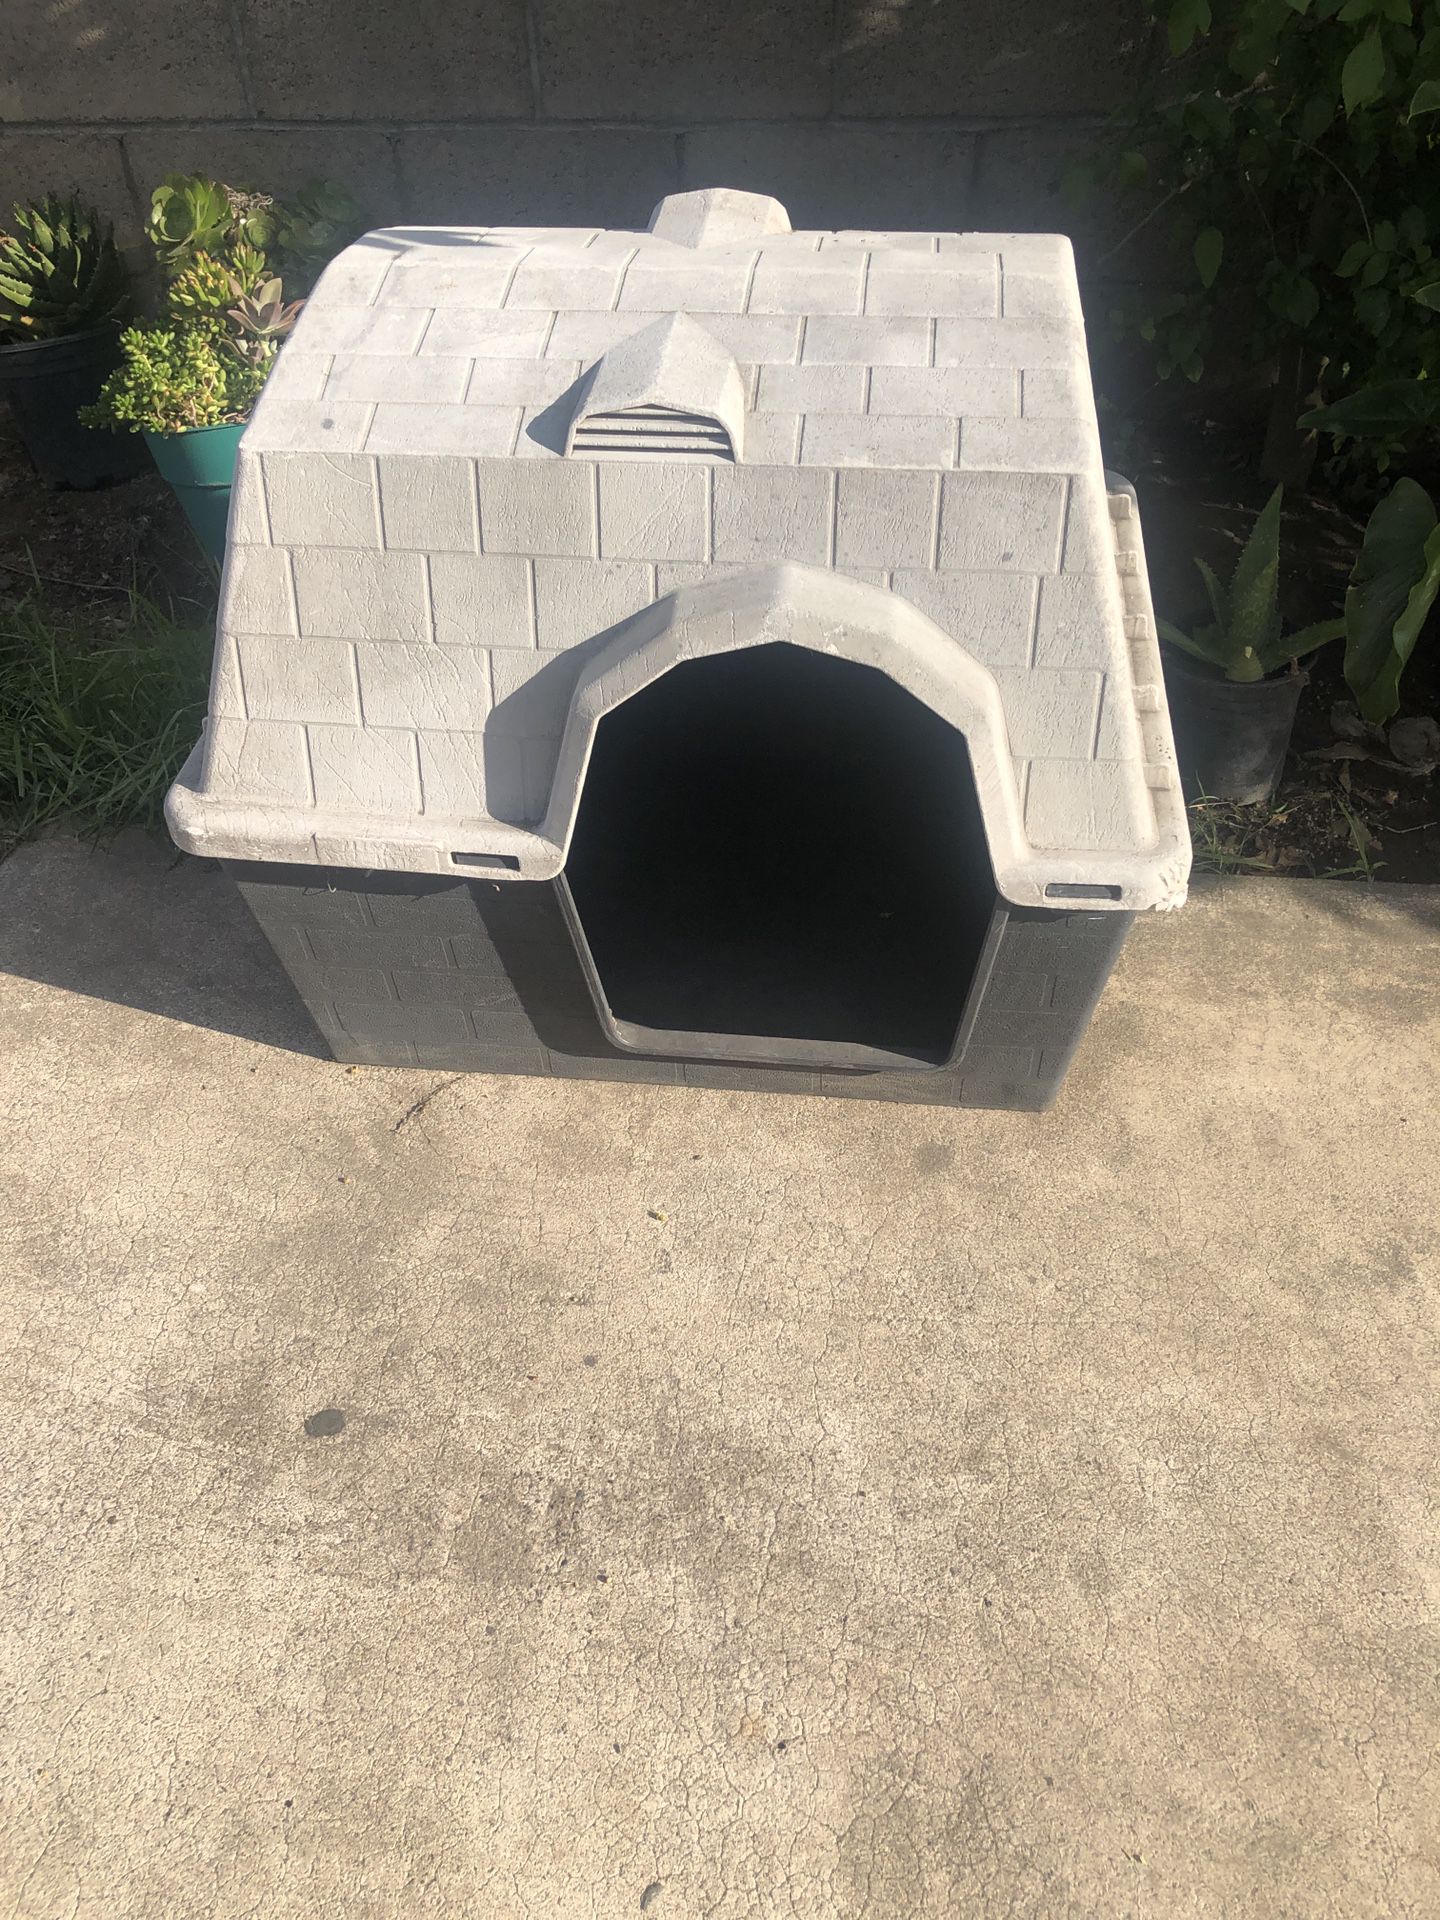 Medium Dog House